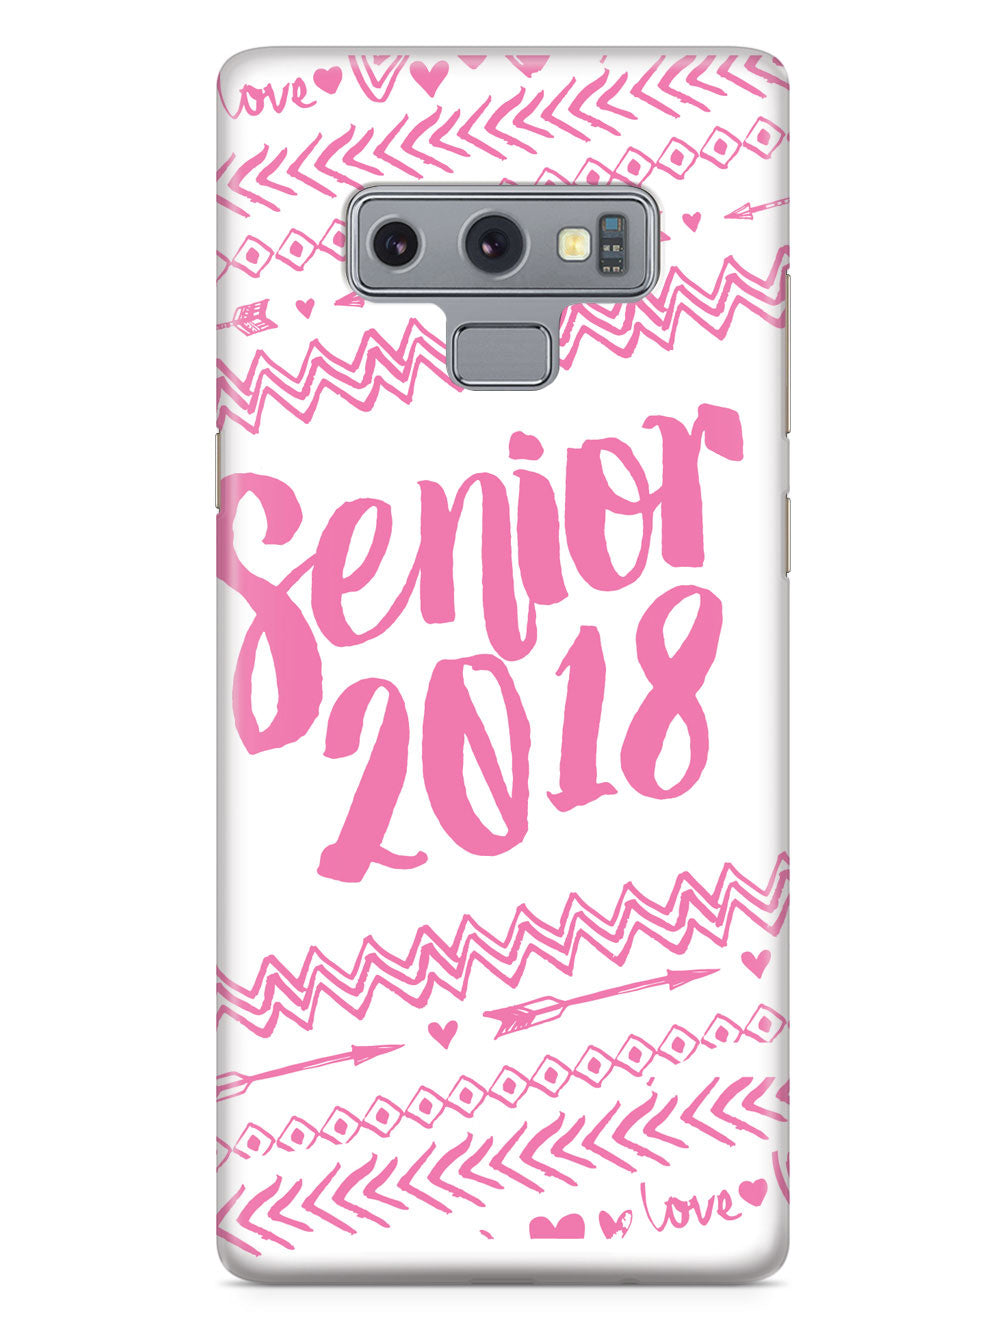 Senior 2018 - Pink Case